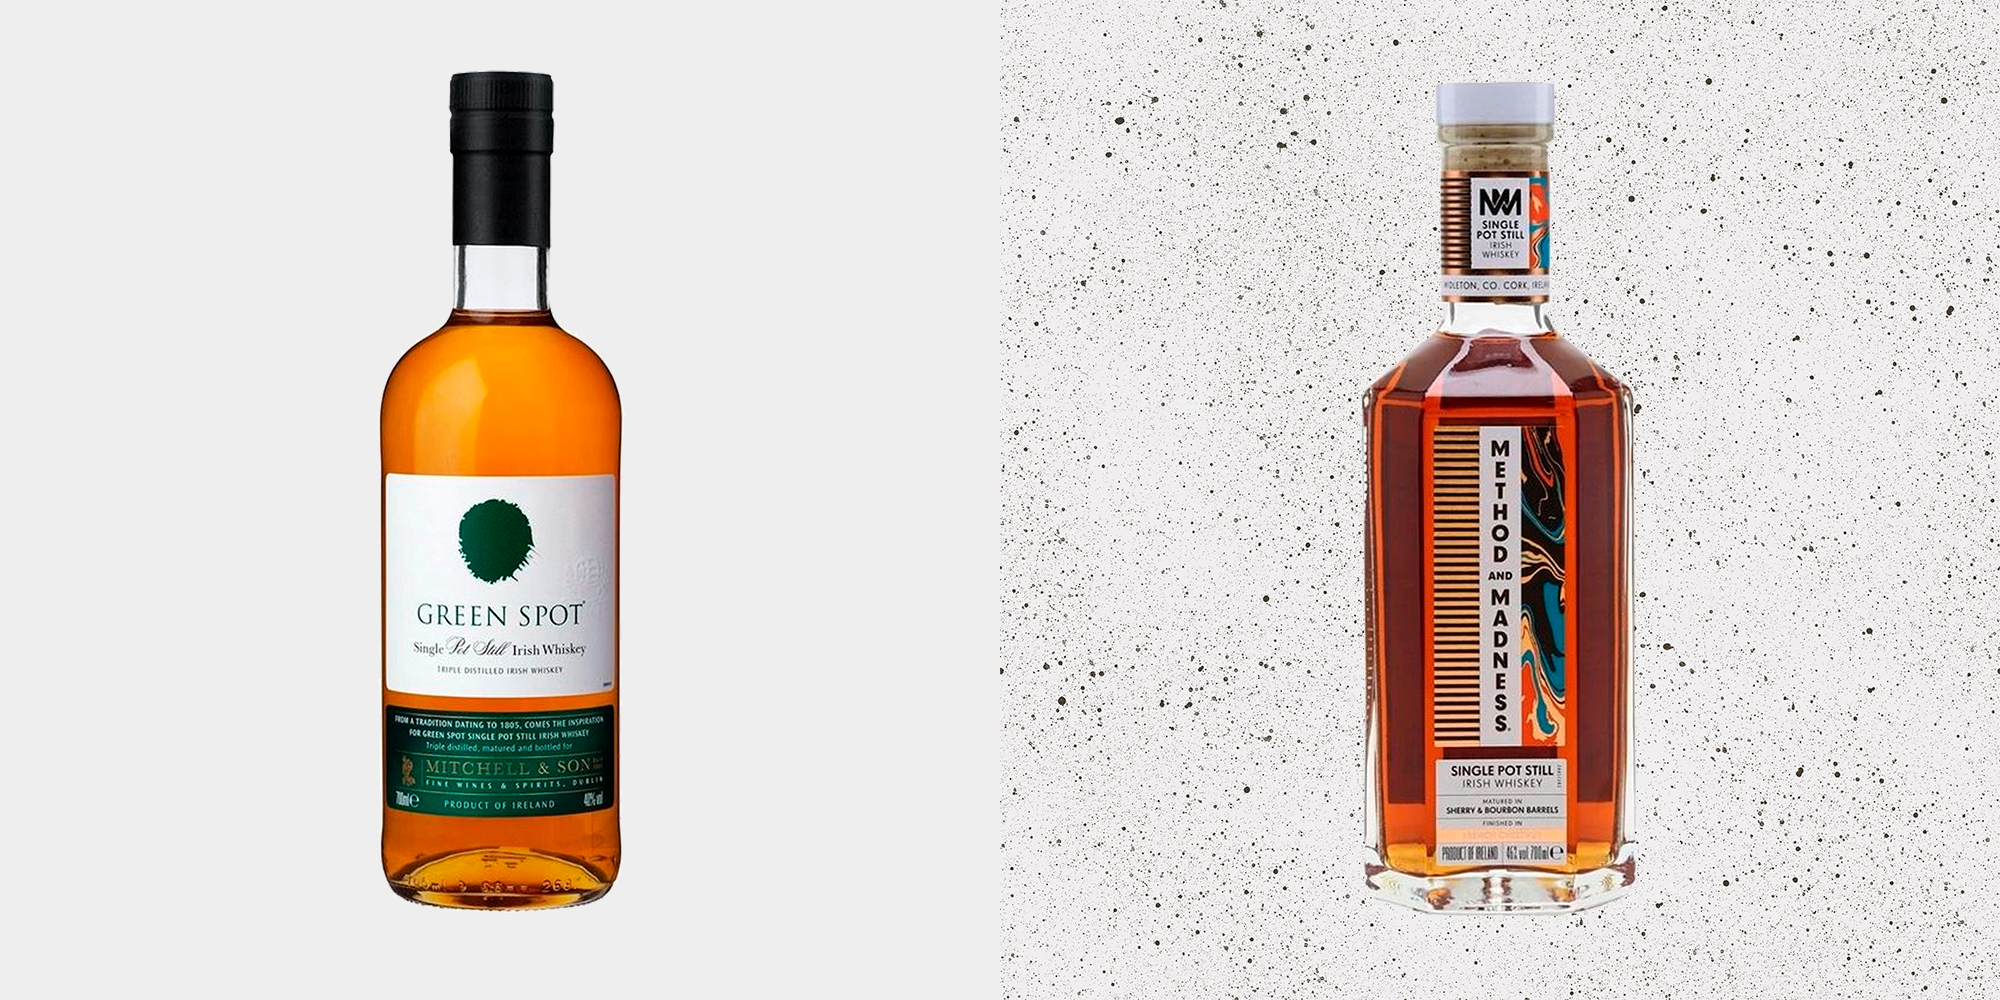 Single Pot Still vs. Single Malt Irish Whiskey